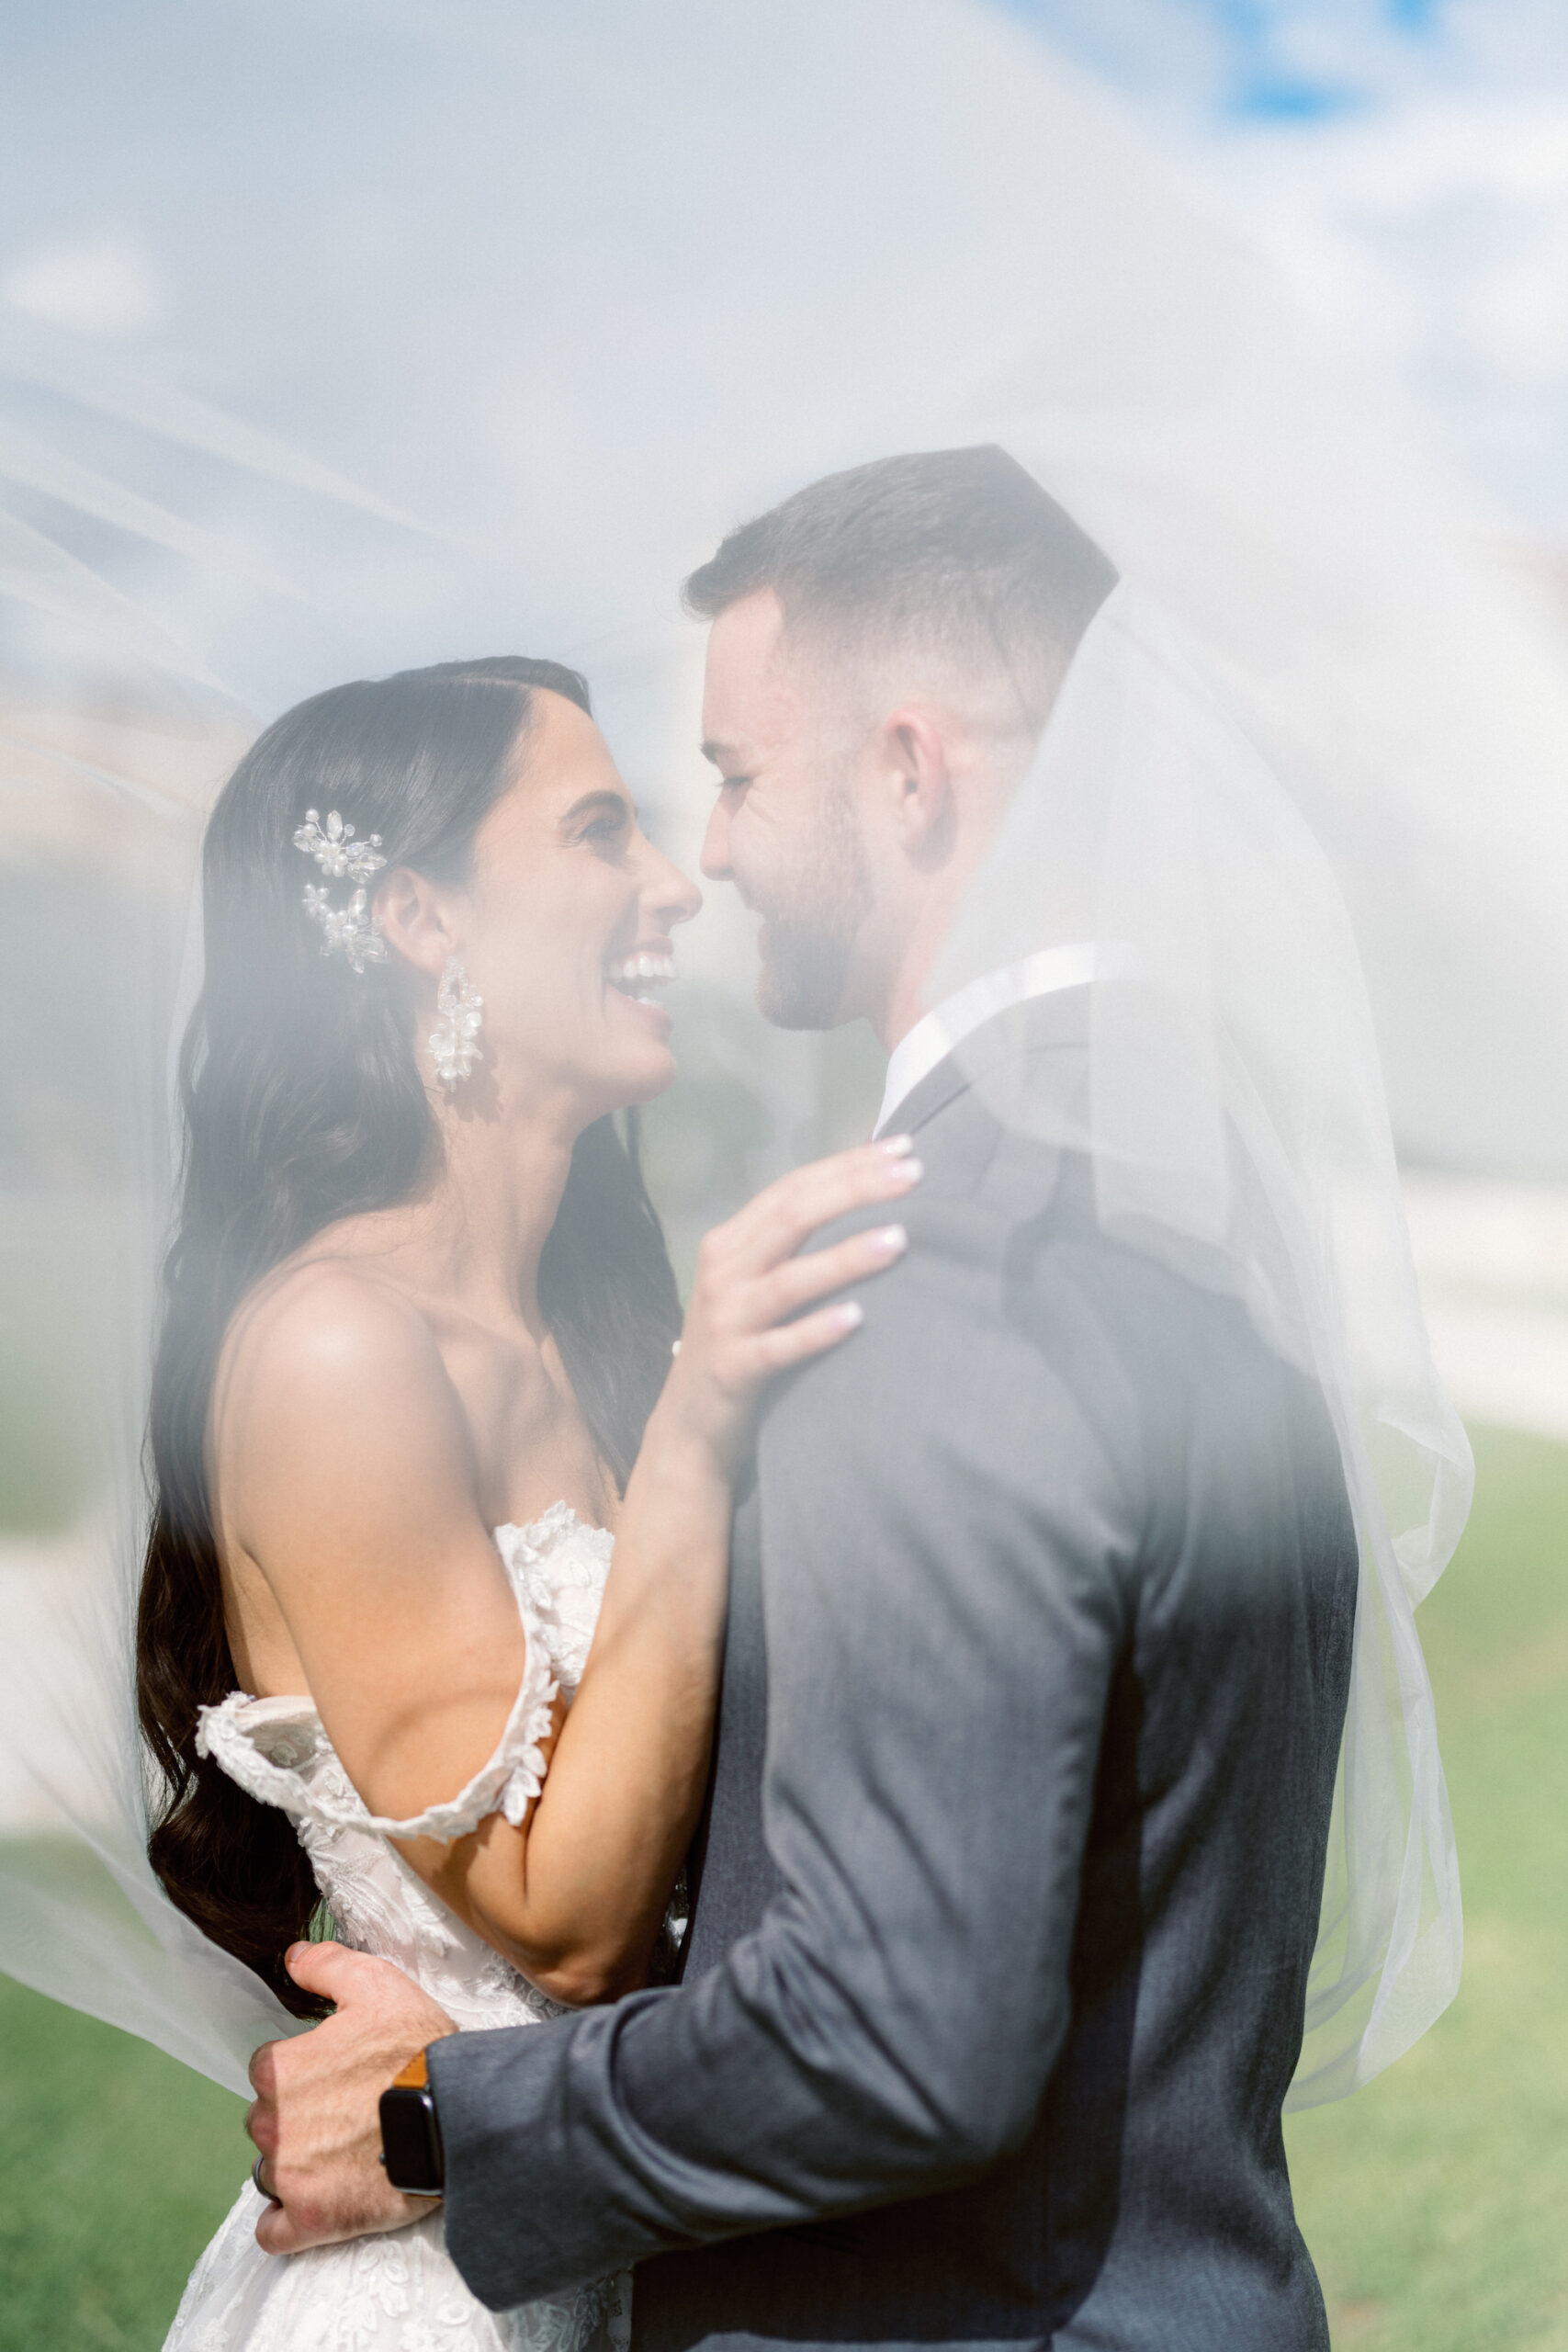 Romantic Bride and Groom Veil Portrait | Tampa Bay Photographer Dewitt for Love